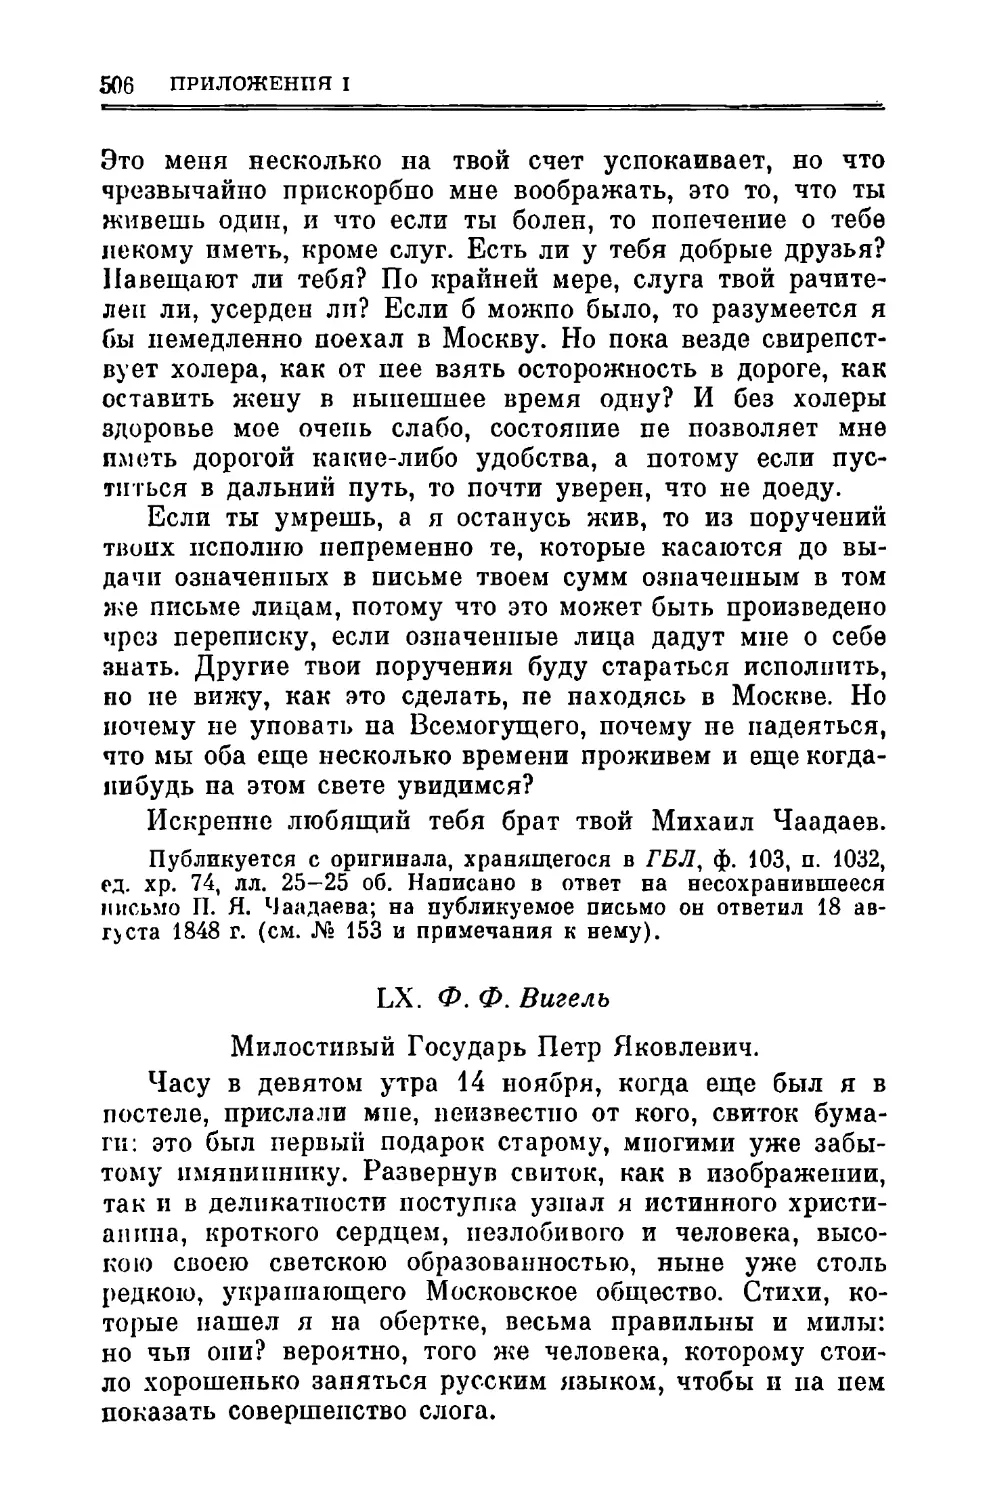 LX. Вигель Ф.Ф. 30.XI.1849